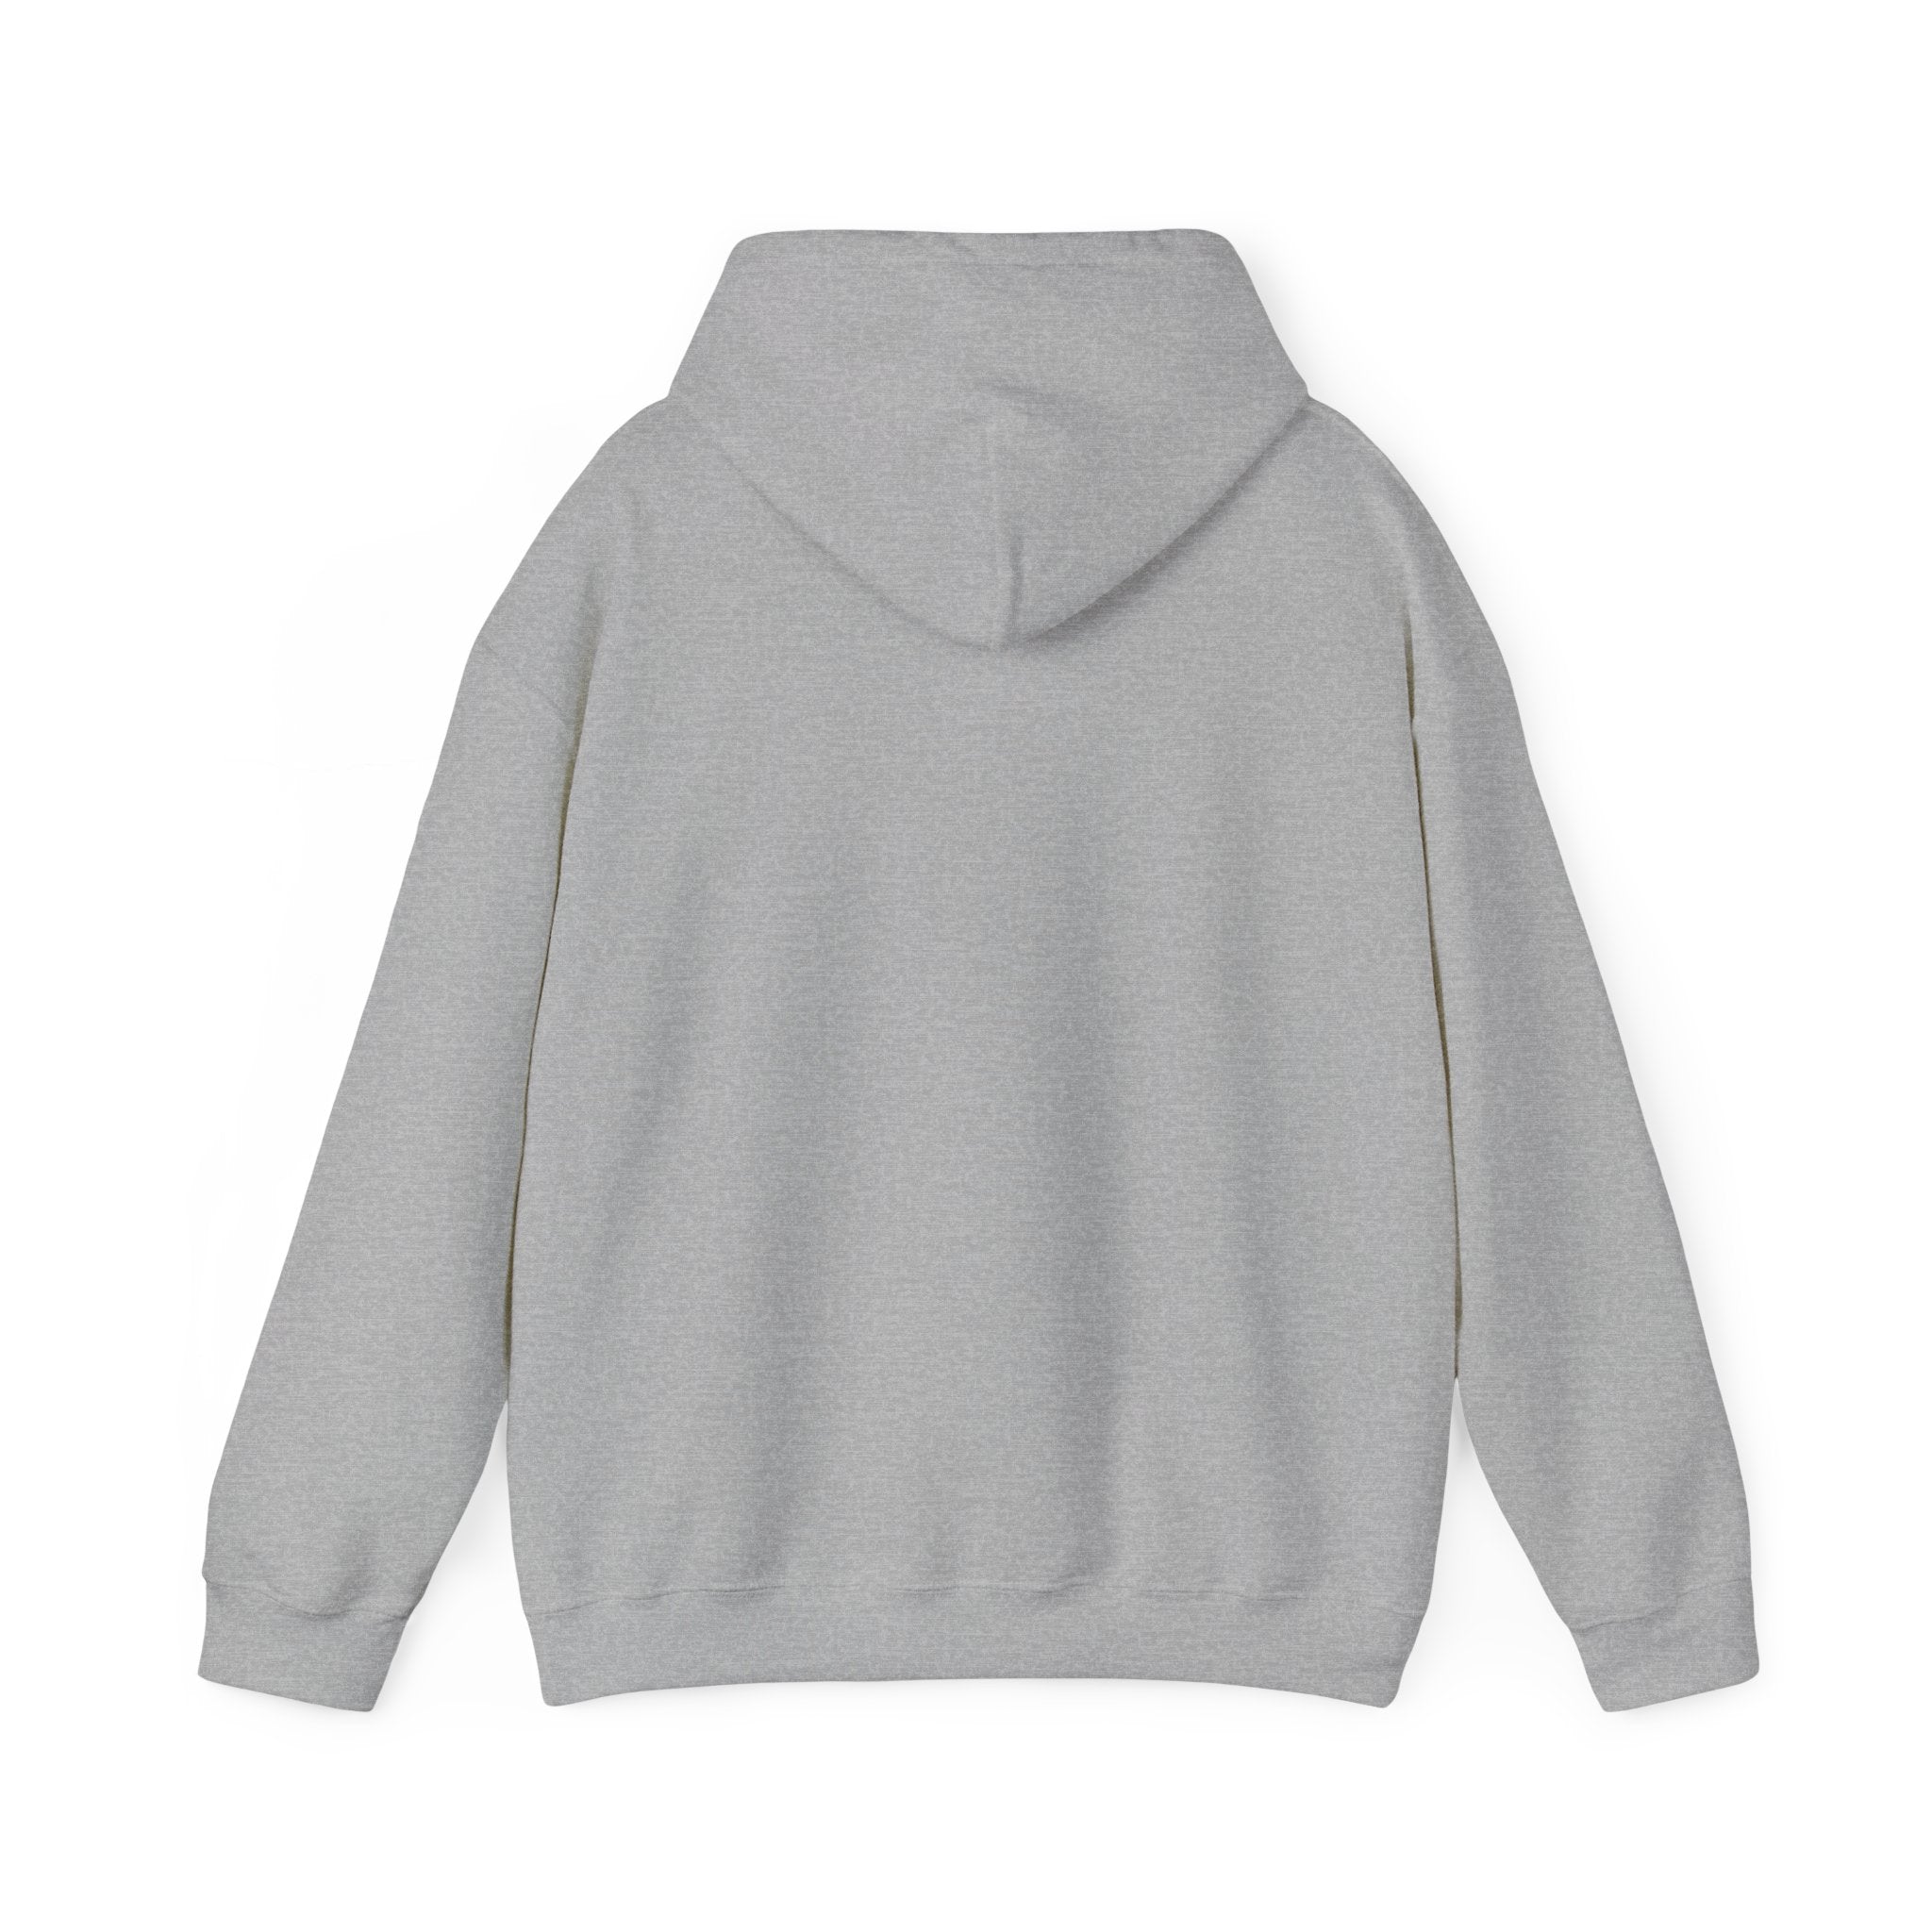 GPAA Hooded Sweatshirt